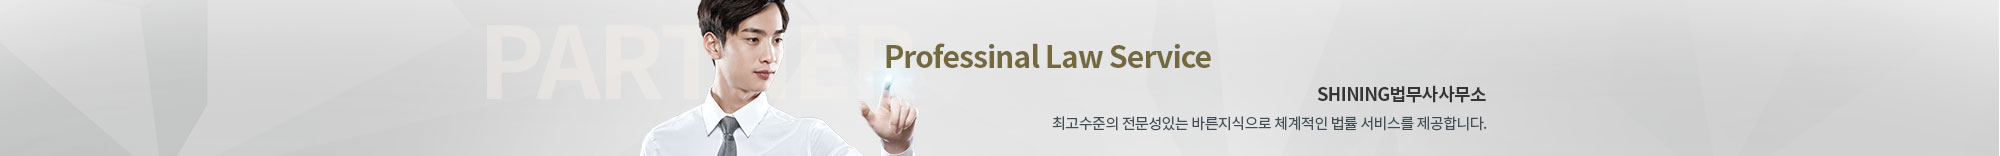 Professinal Law Service 최고수준의 전문성 있는 바른지식으로 체계적인 법률 서비스를 제공합니다.